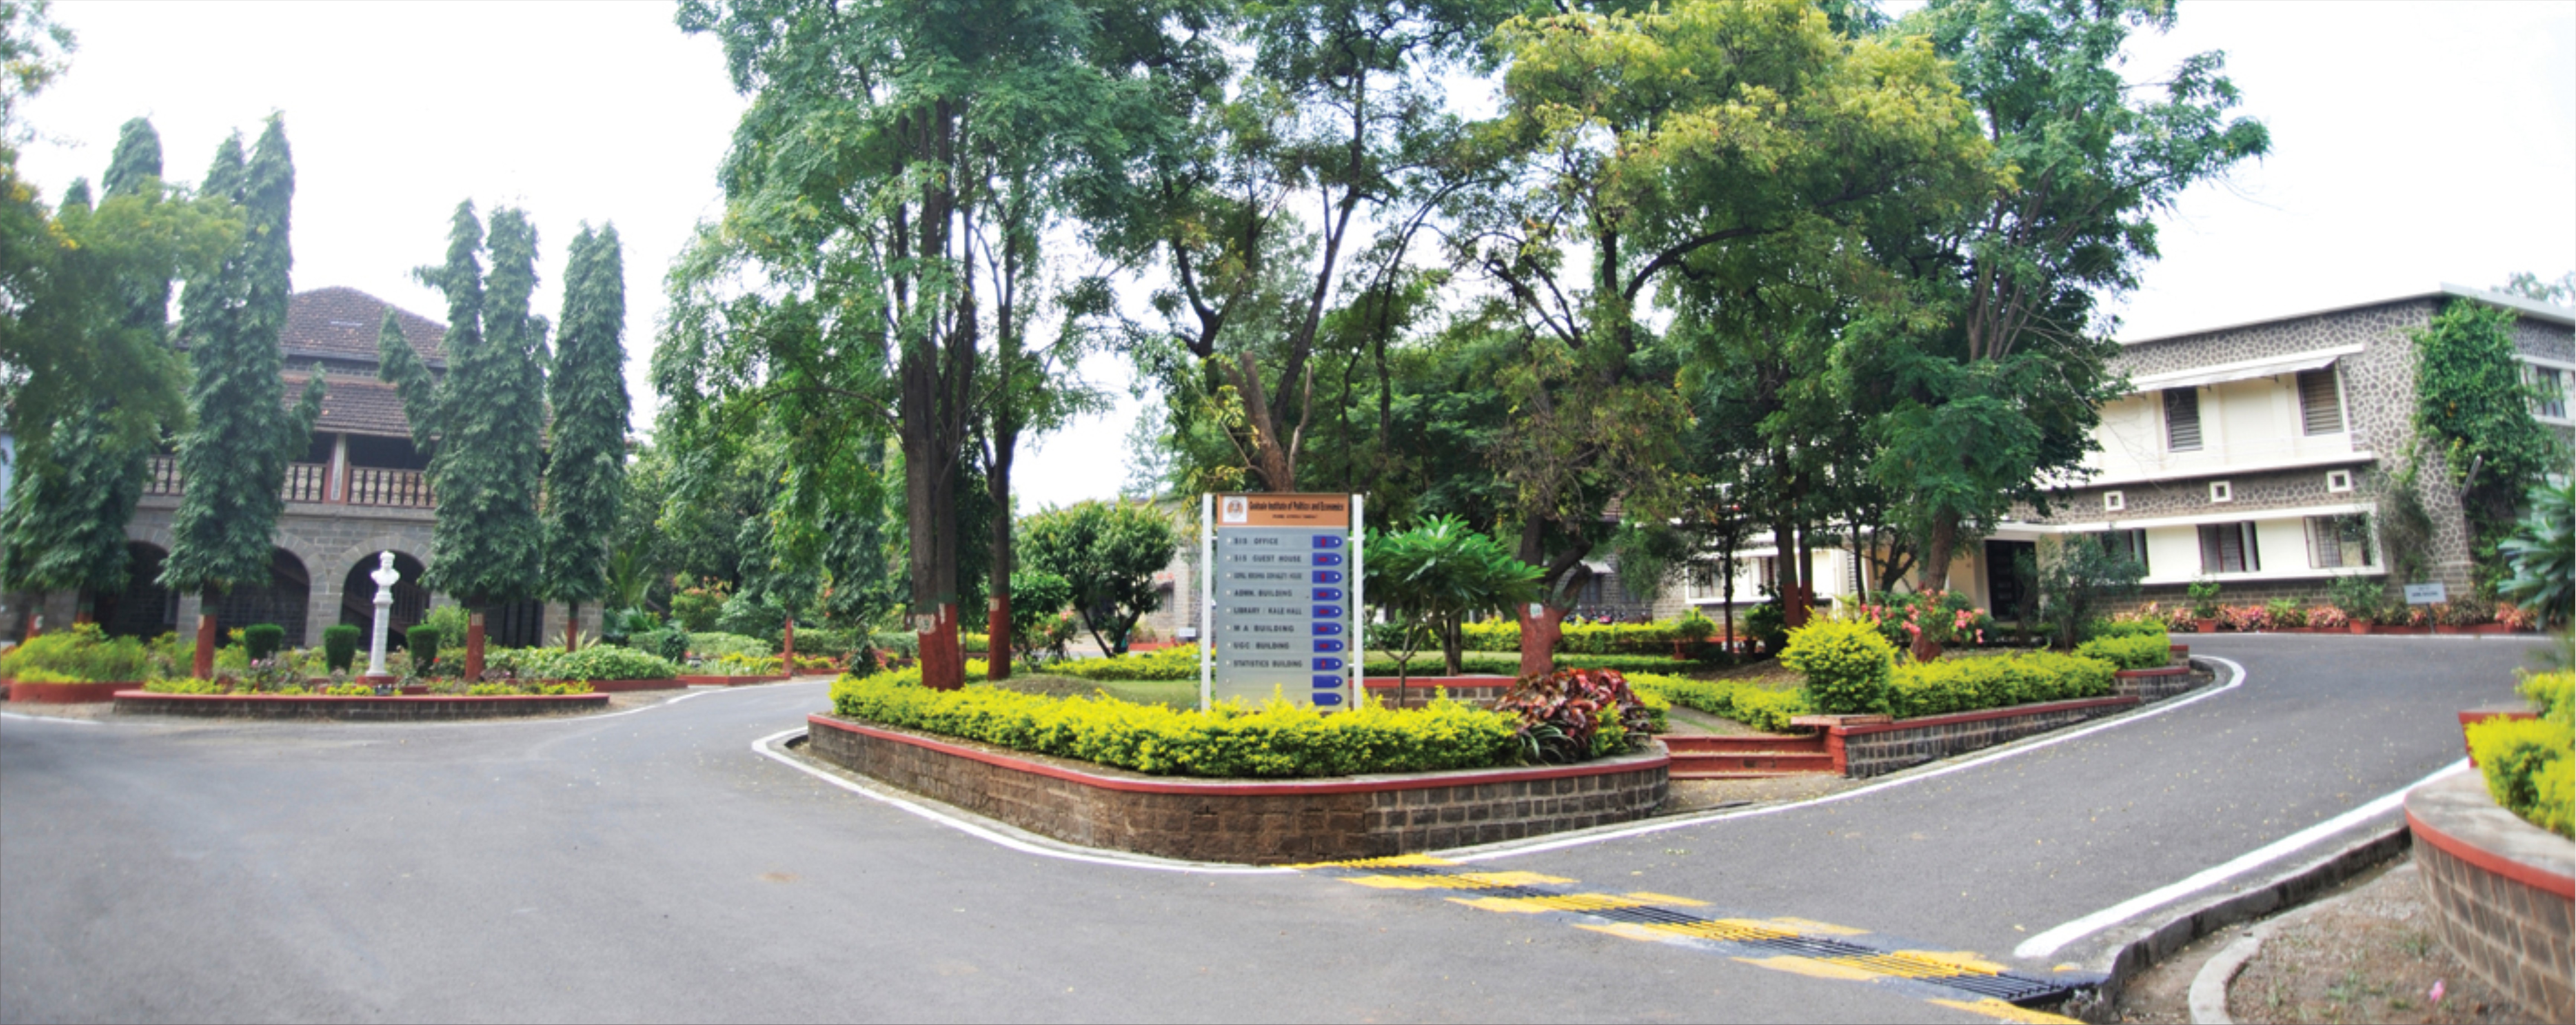 Gokhale Institute of Politics and Economics Image